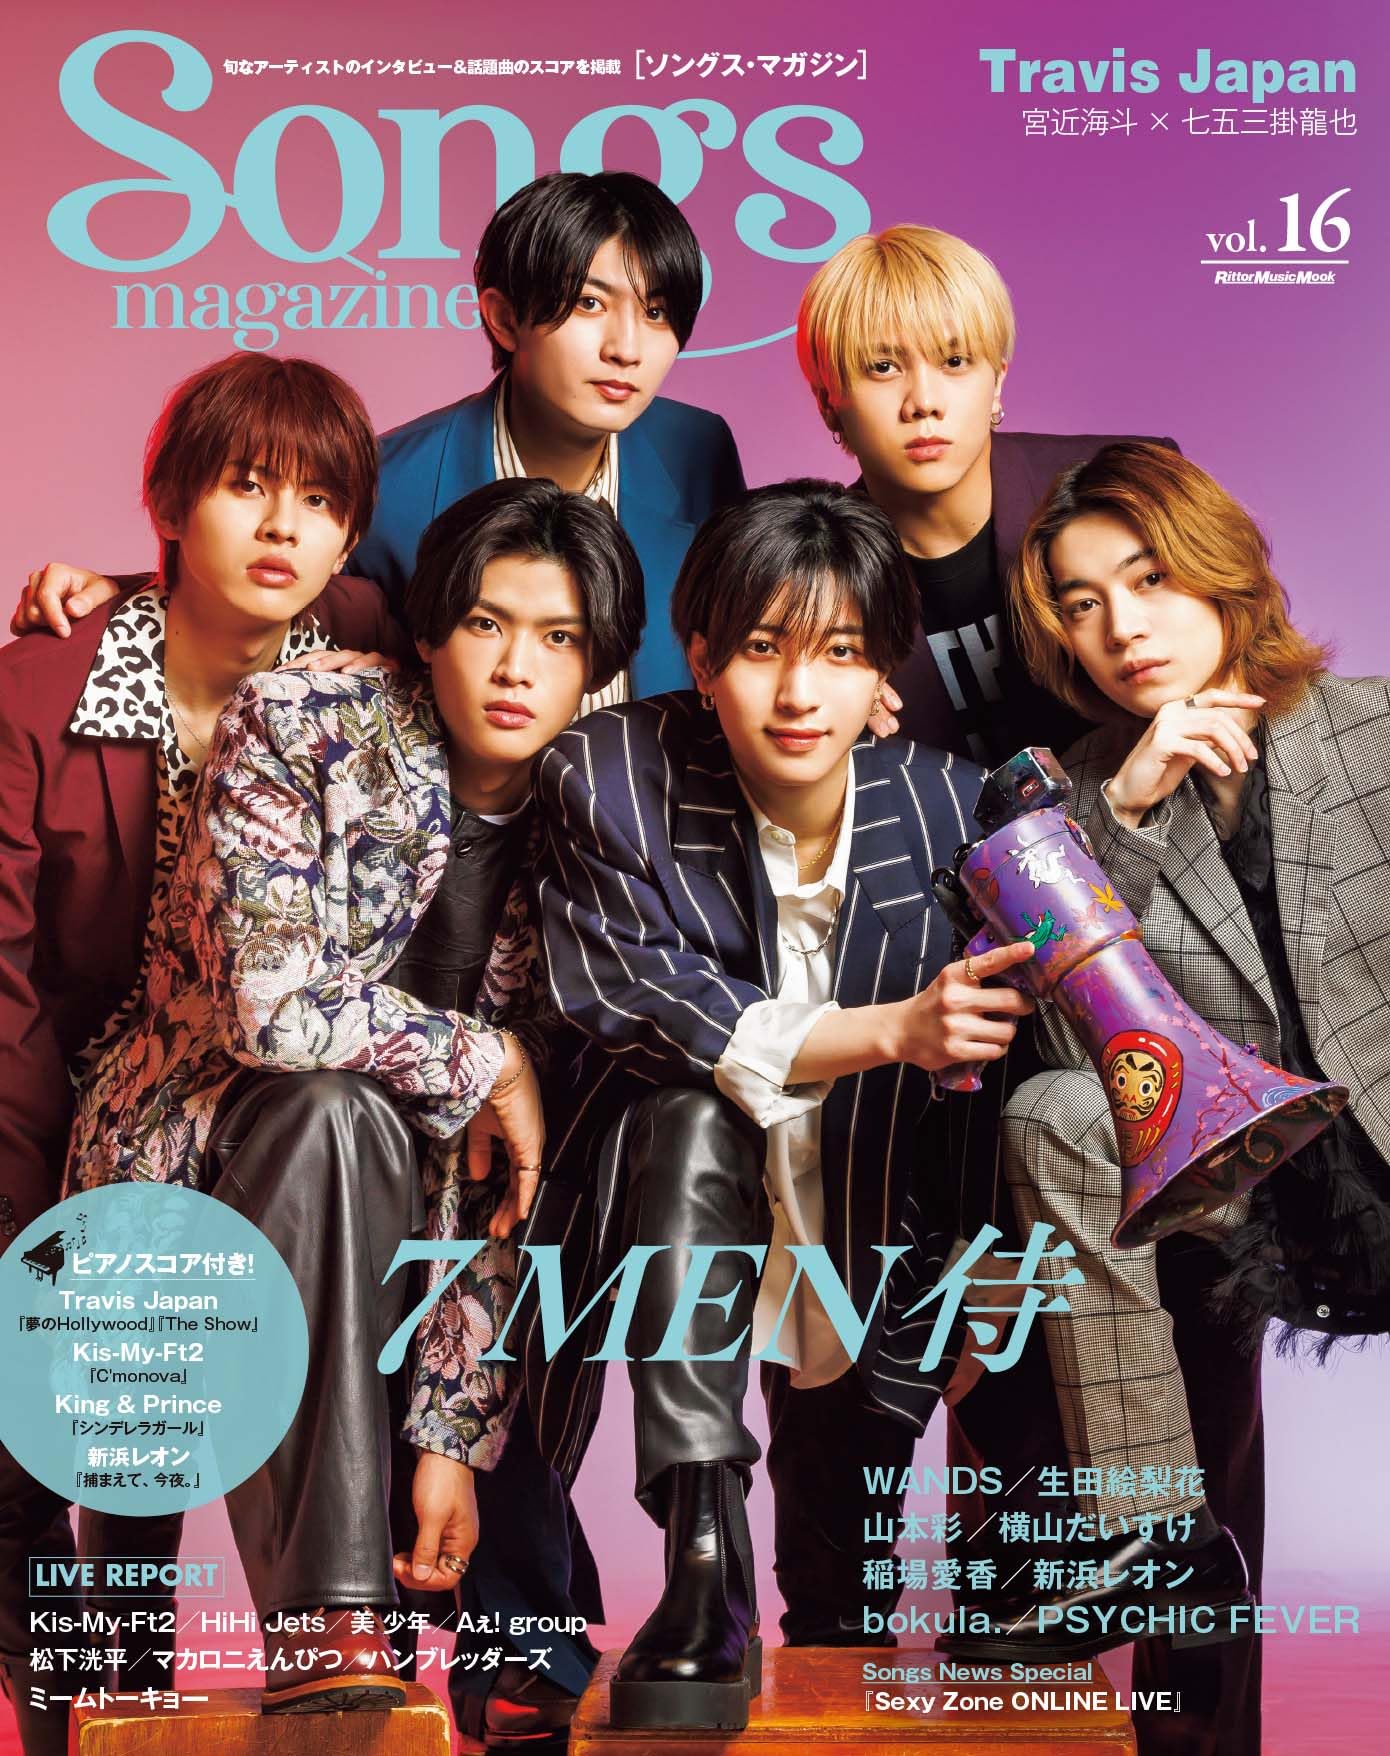 Songs magazine (songs* журнал ) vol.16 ( обложка &amp; шт голова :7 MEN samurai ) (lito- музыка * Mucc ) (Rittor